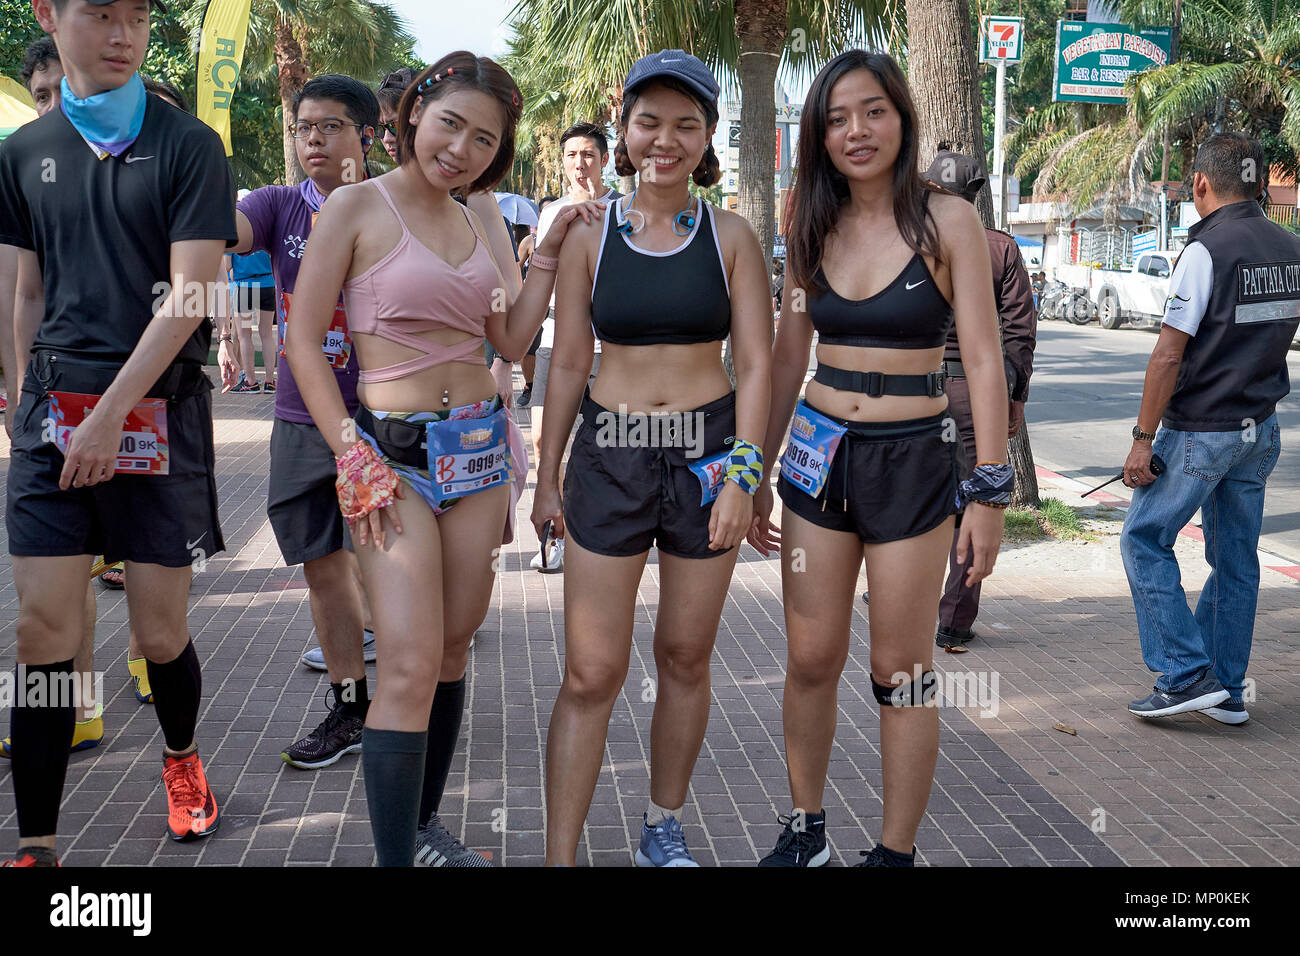 https://c8.alamy.com/comp/MP0KEK/fun-run-and-colourful-female-competitors-pattaya-thailand-2018-MP0KEK.jpg